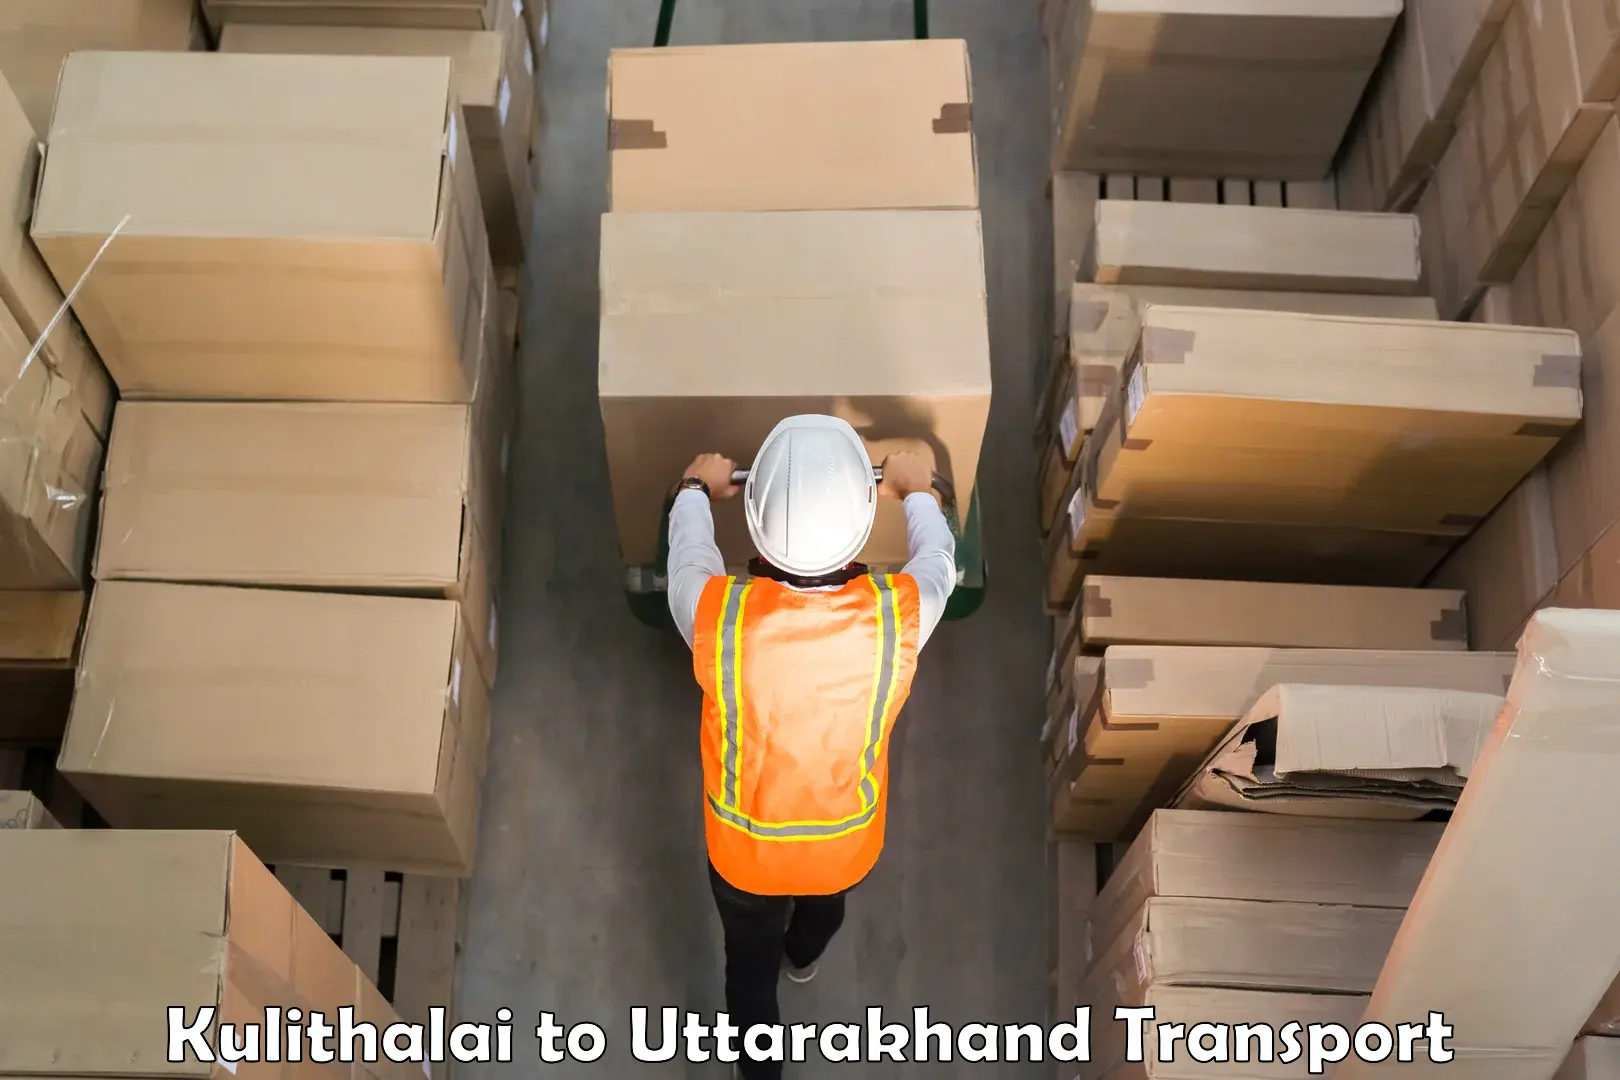 Truck transport companies in India Kulithalai to Uttarakhand